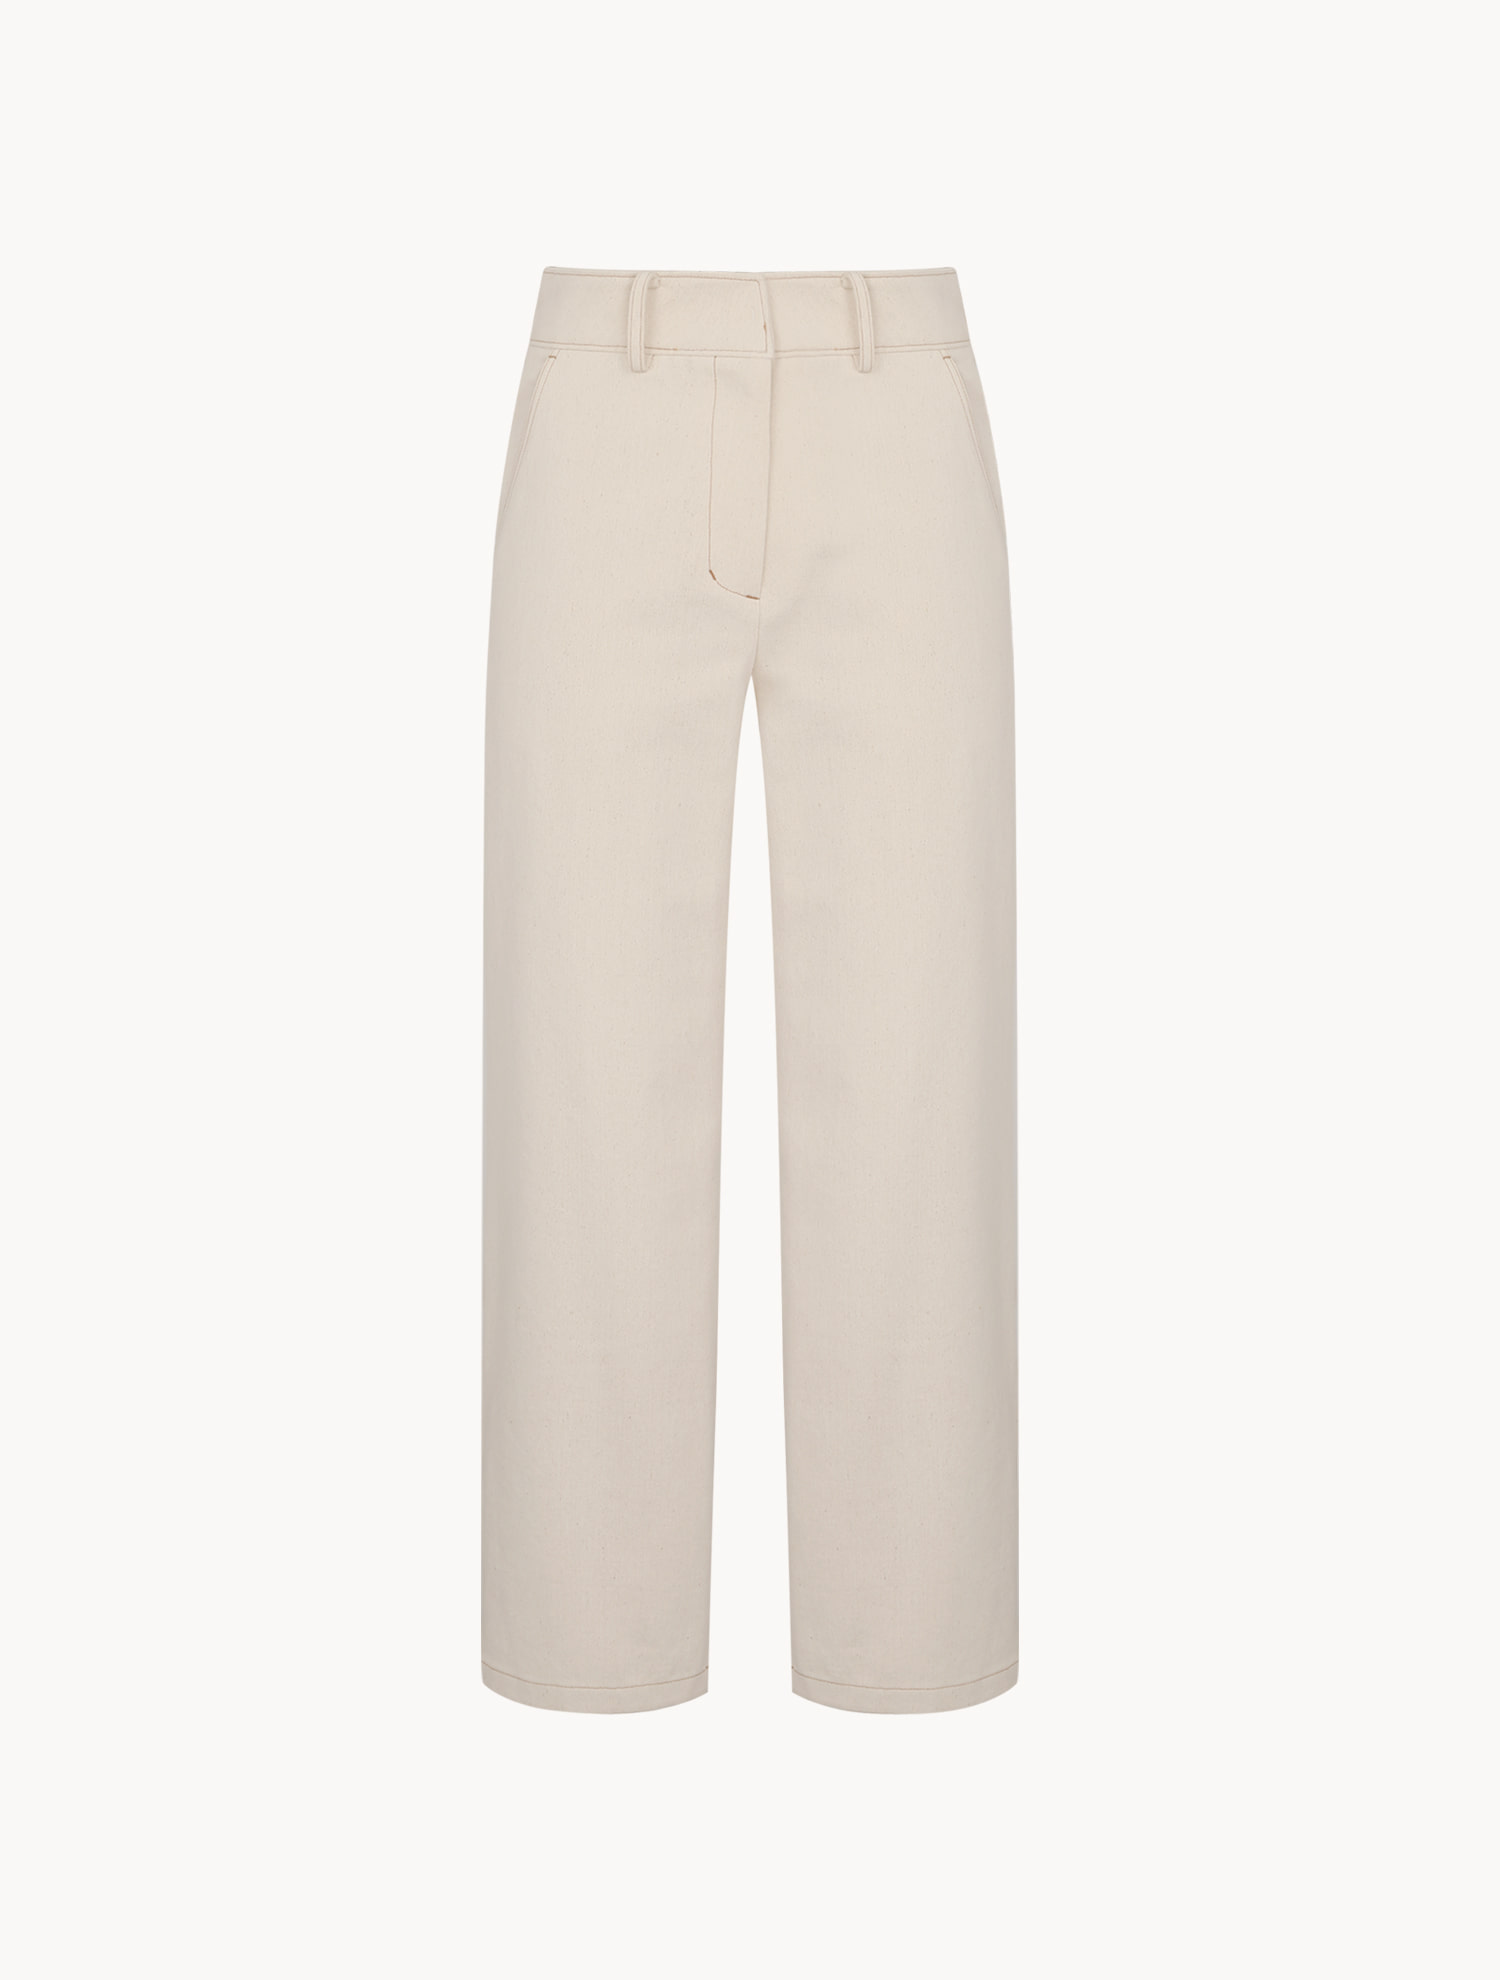 [WINTER SALE 40%]Stitch Trousers - Natural beige